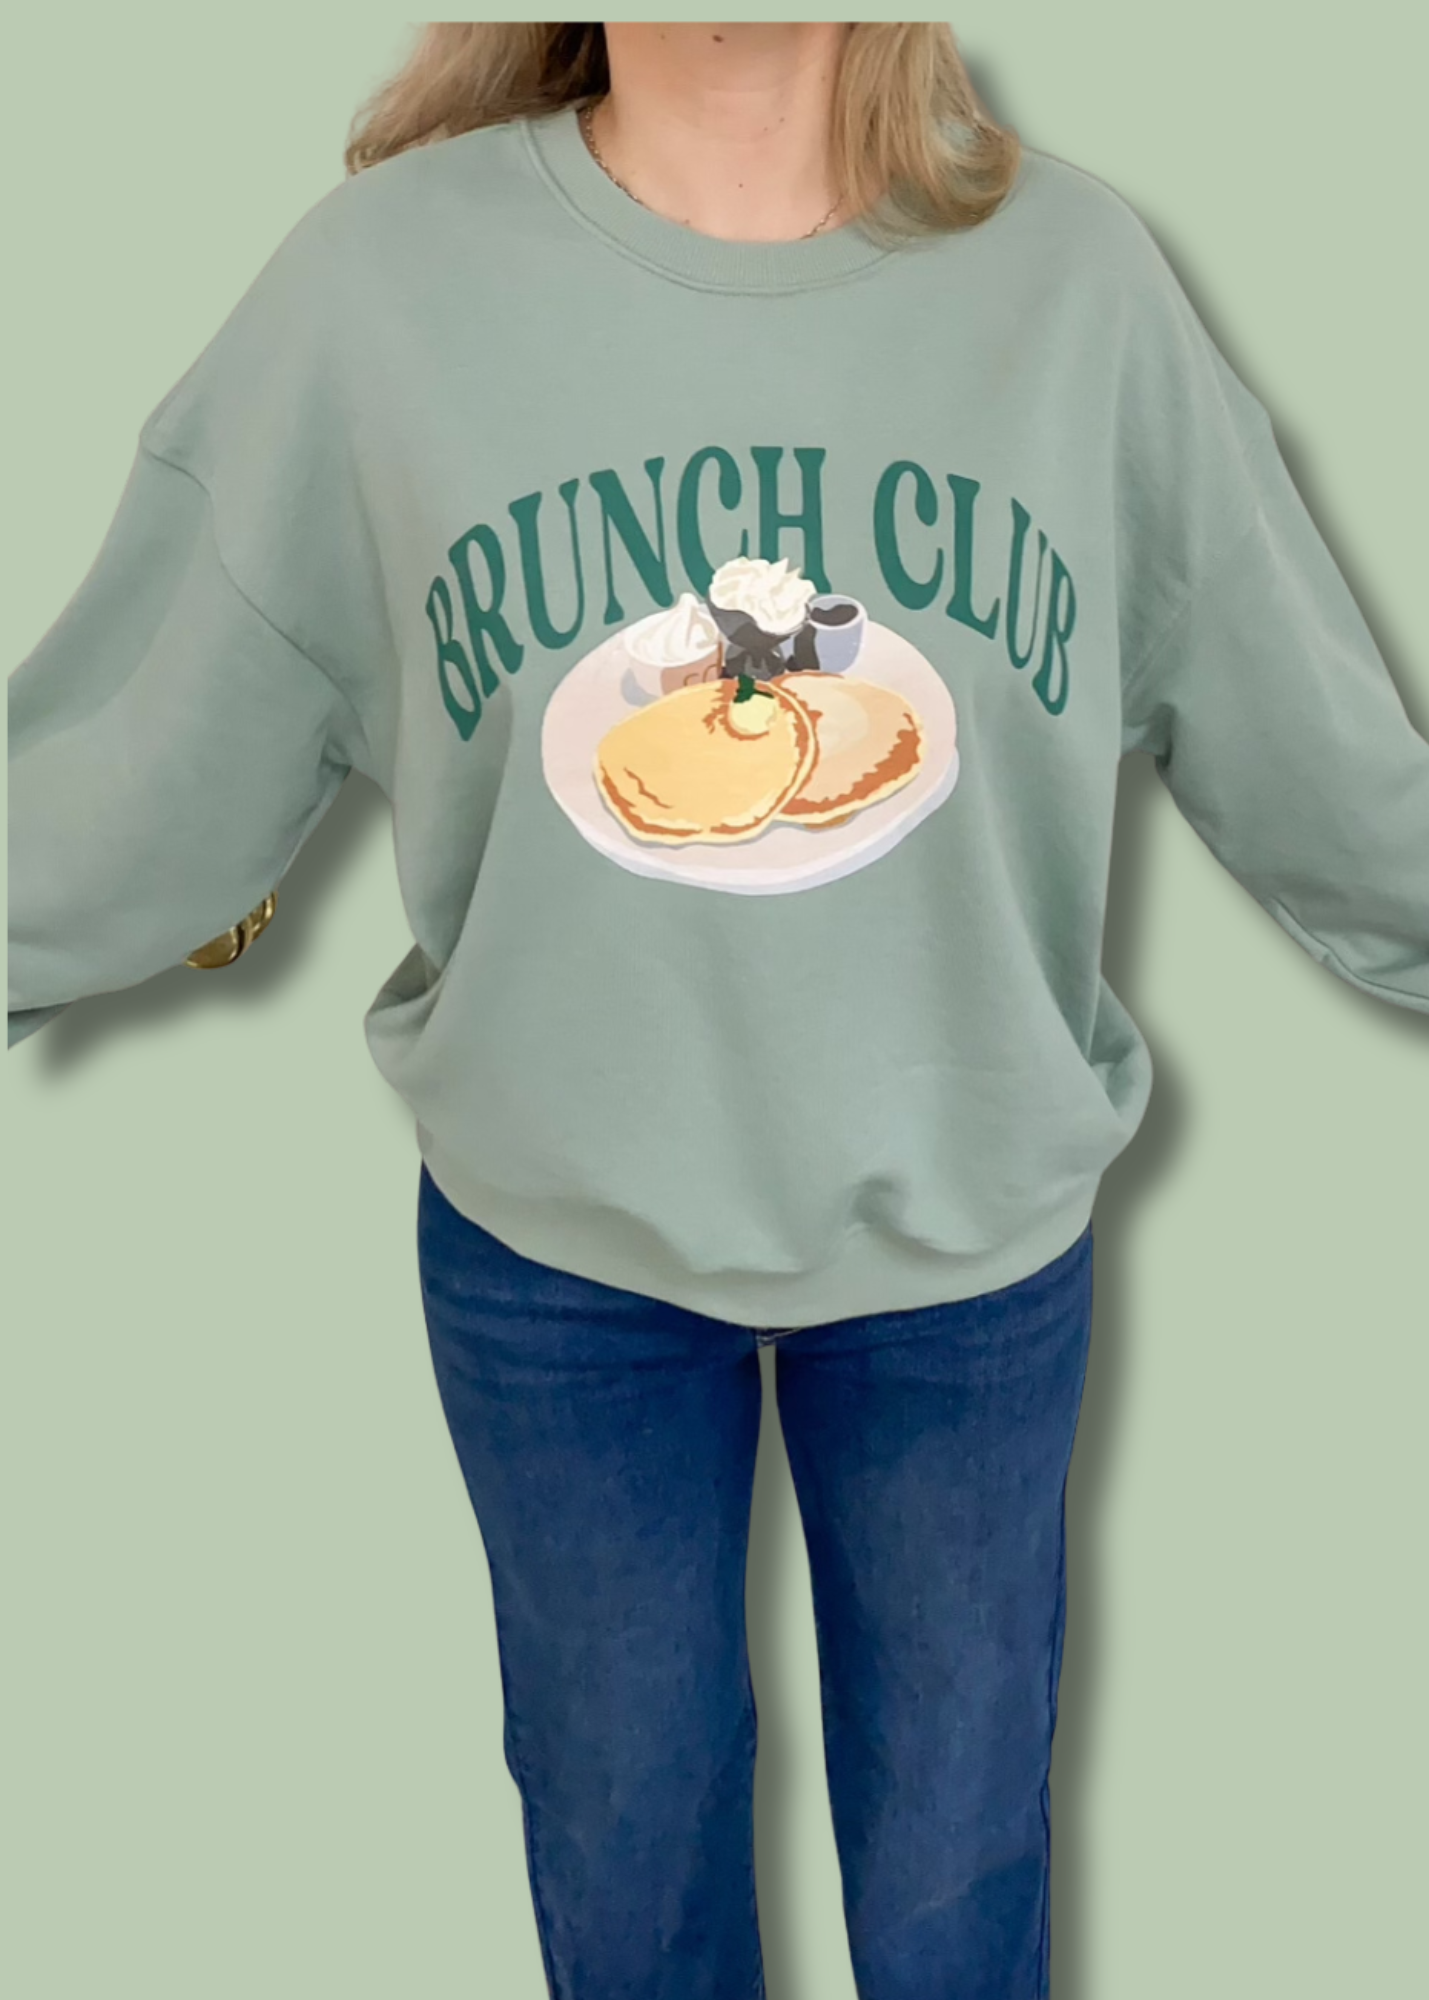 Brunch Club Crewneck Sweatshirt